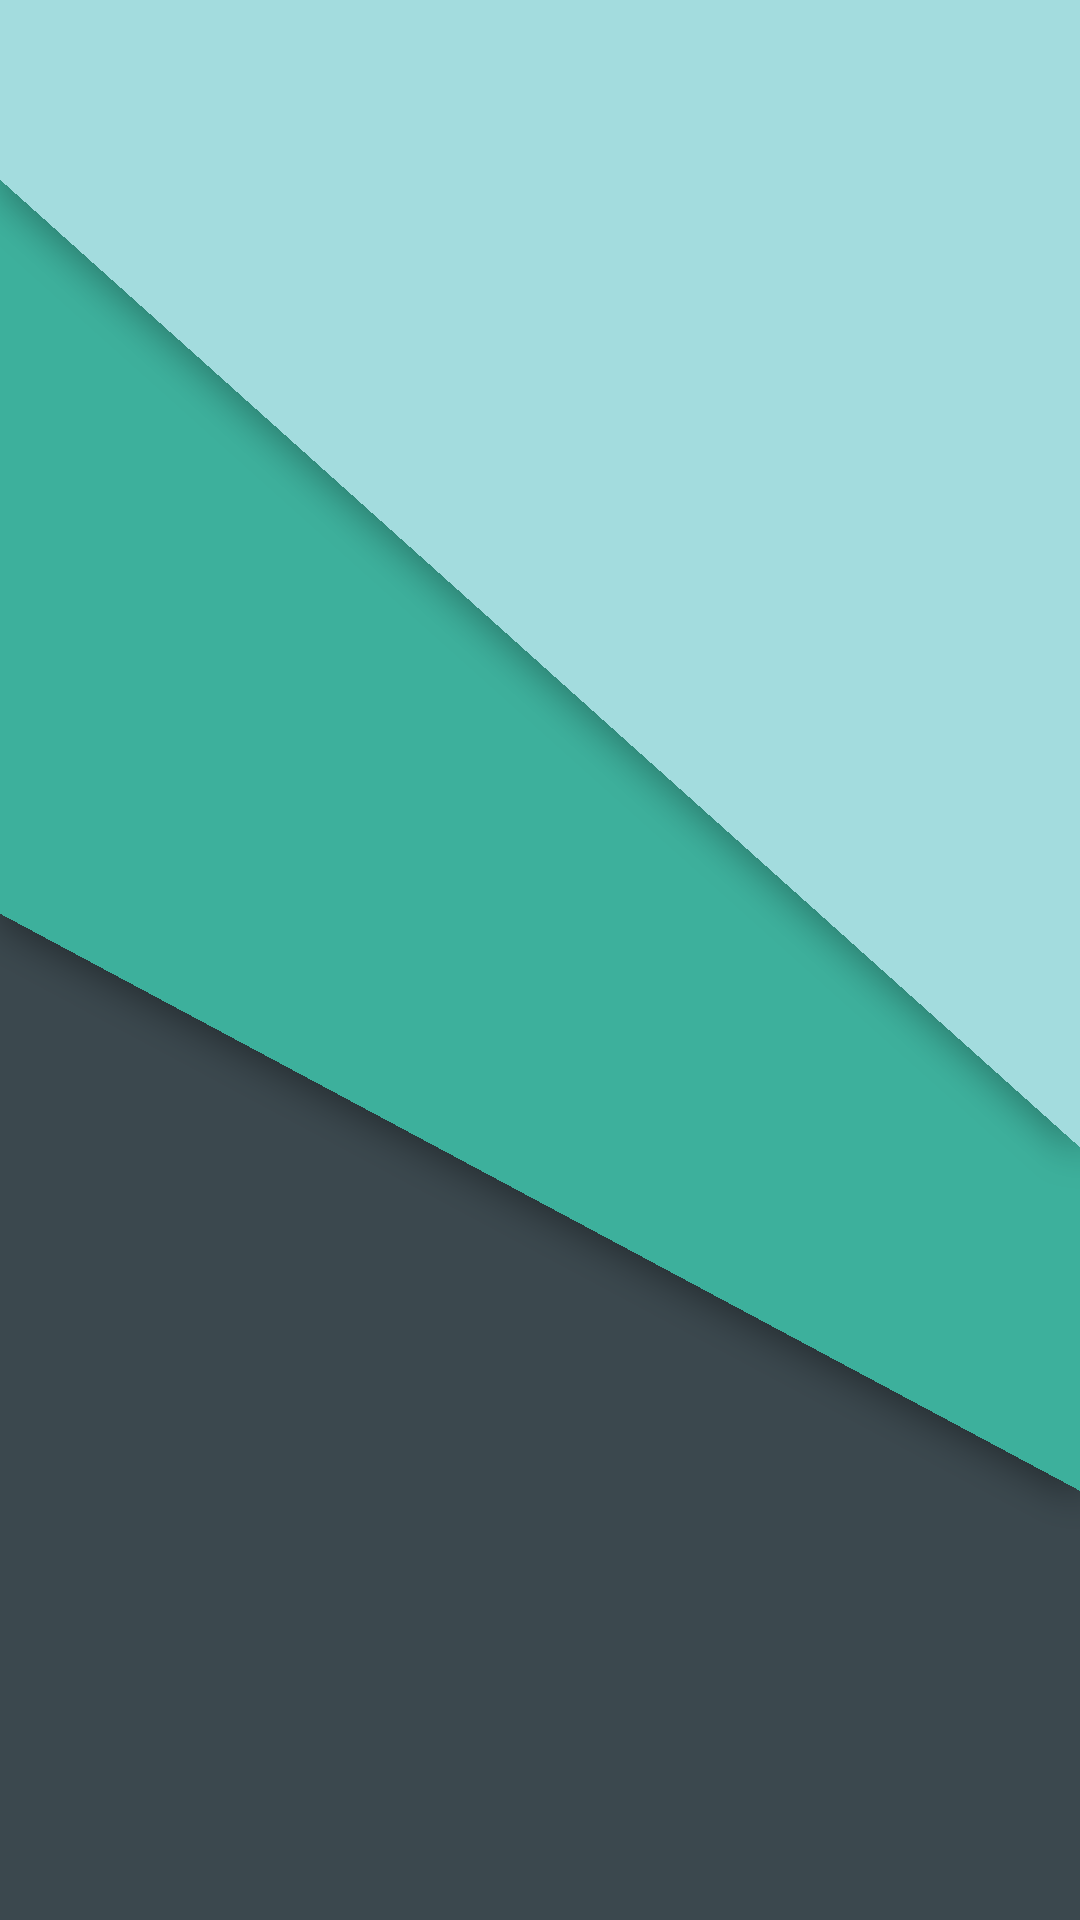 Material Design Inspired Wallpaper. Android wallpaper, Geometric wallpaper iphone, Computer wallpaper desktop wallpaper